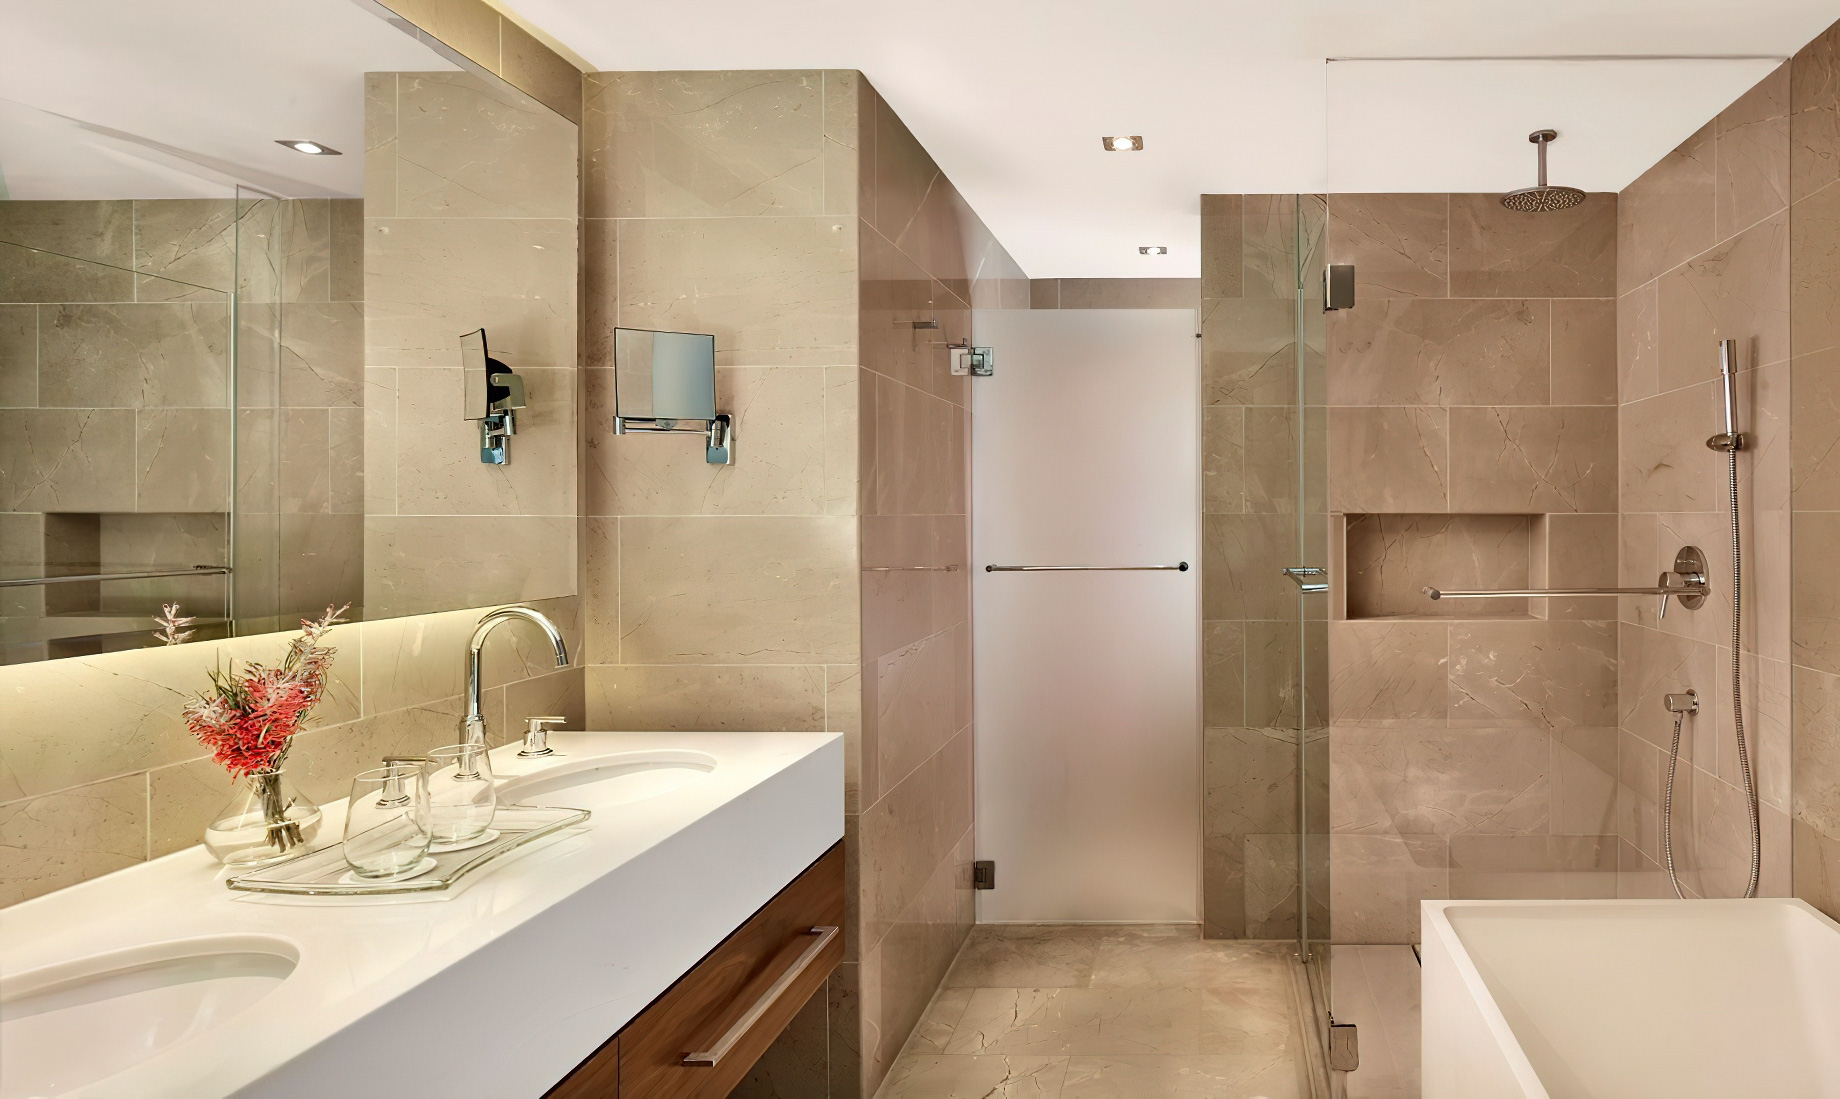 The Ritz-Carlton, Herzliya Hotel – Herzliya, Israel – Studio Room Bathroom Interior